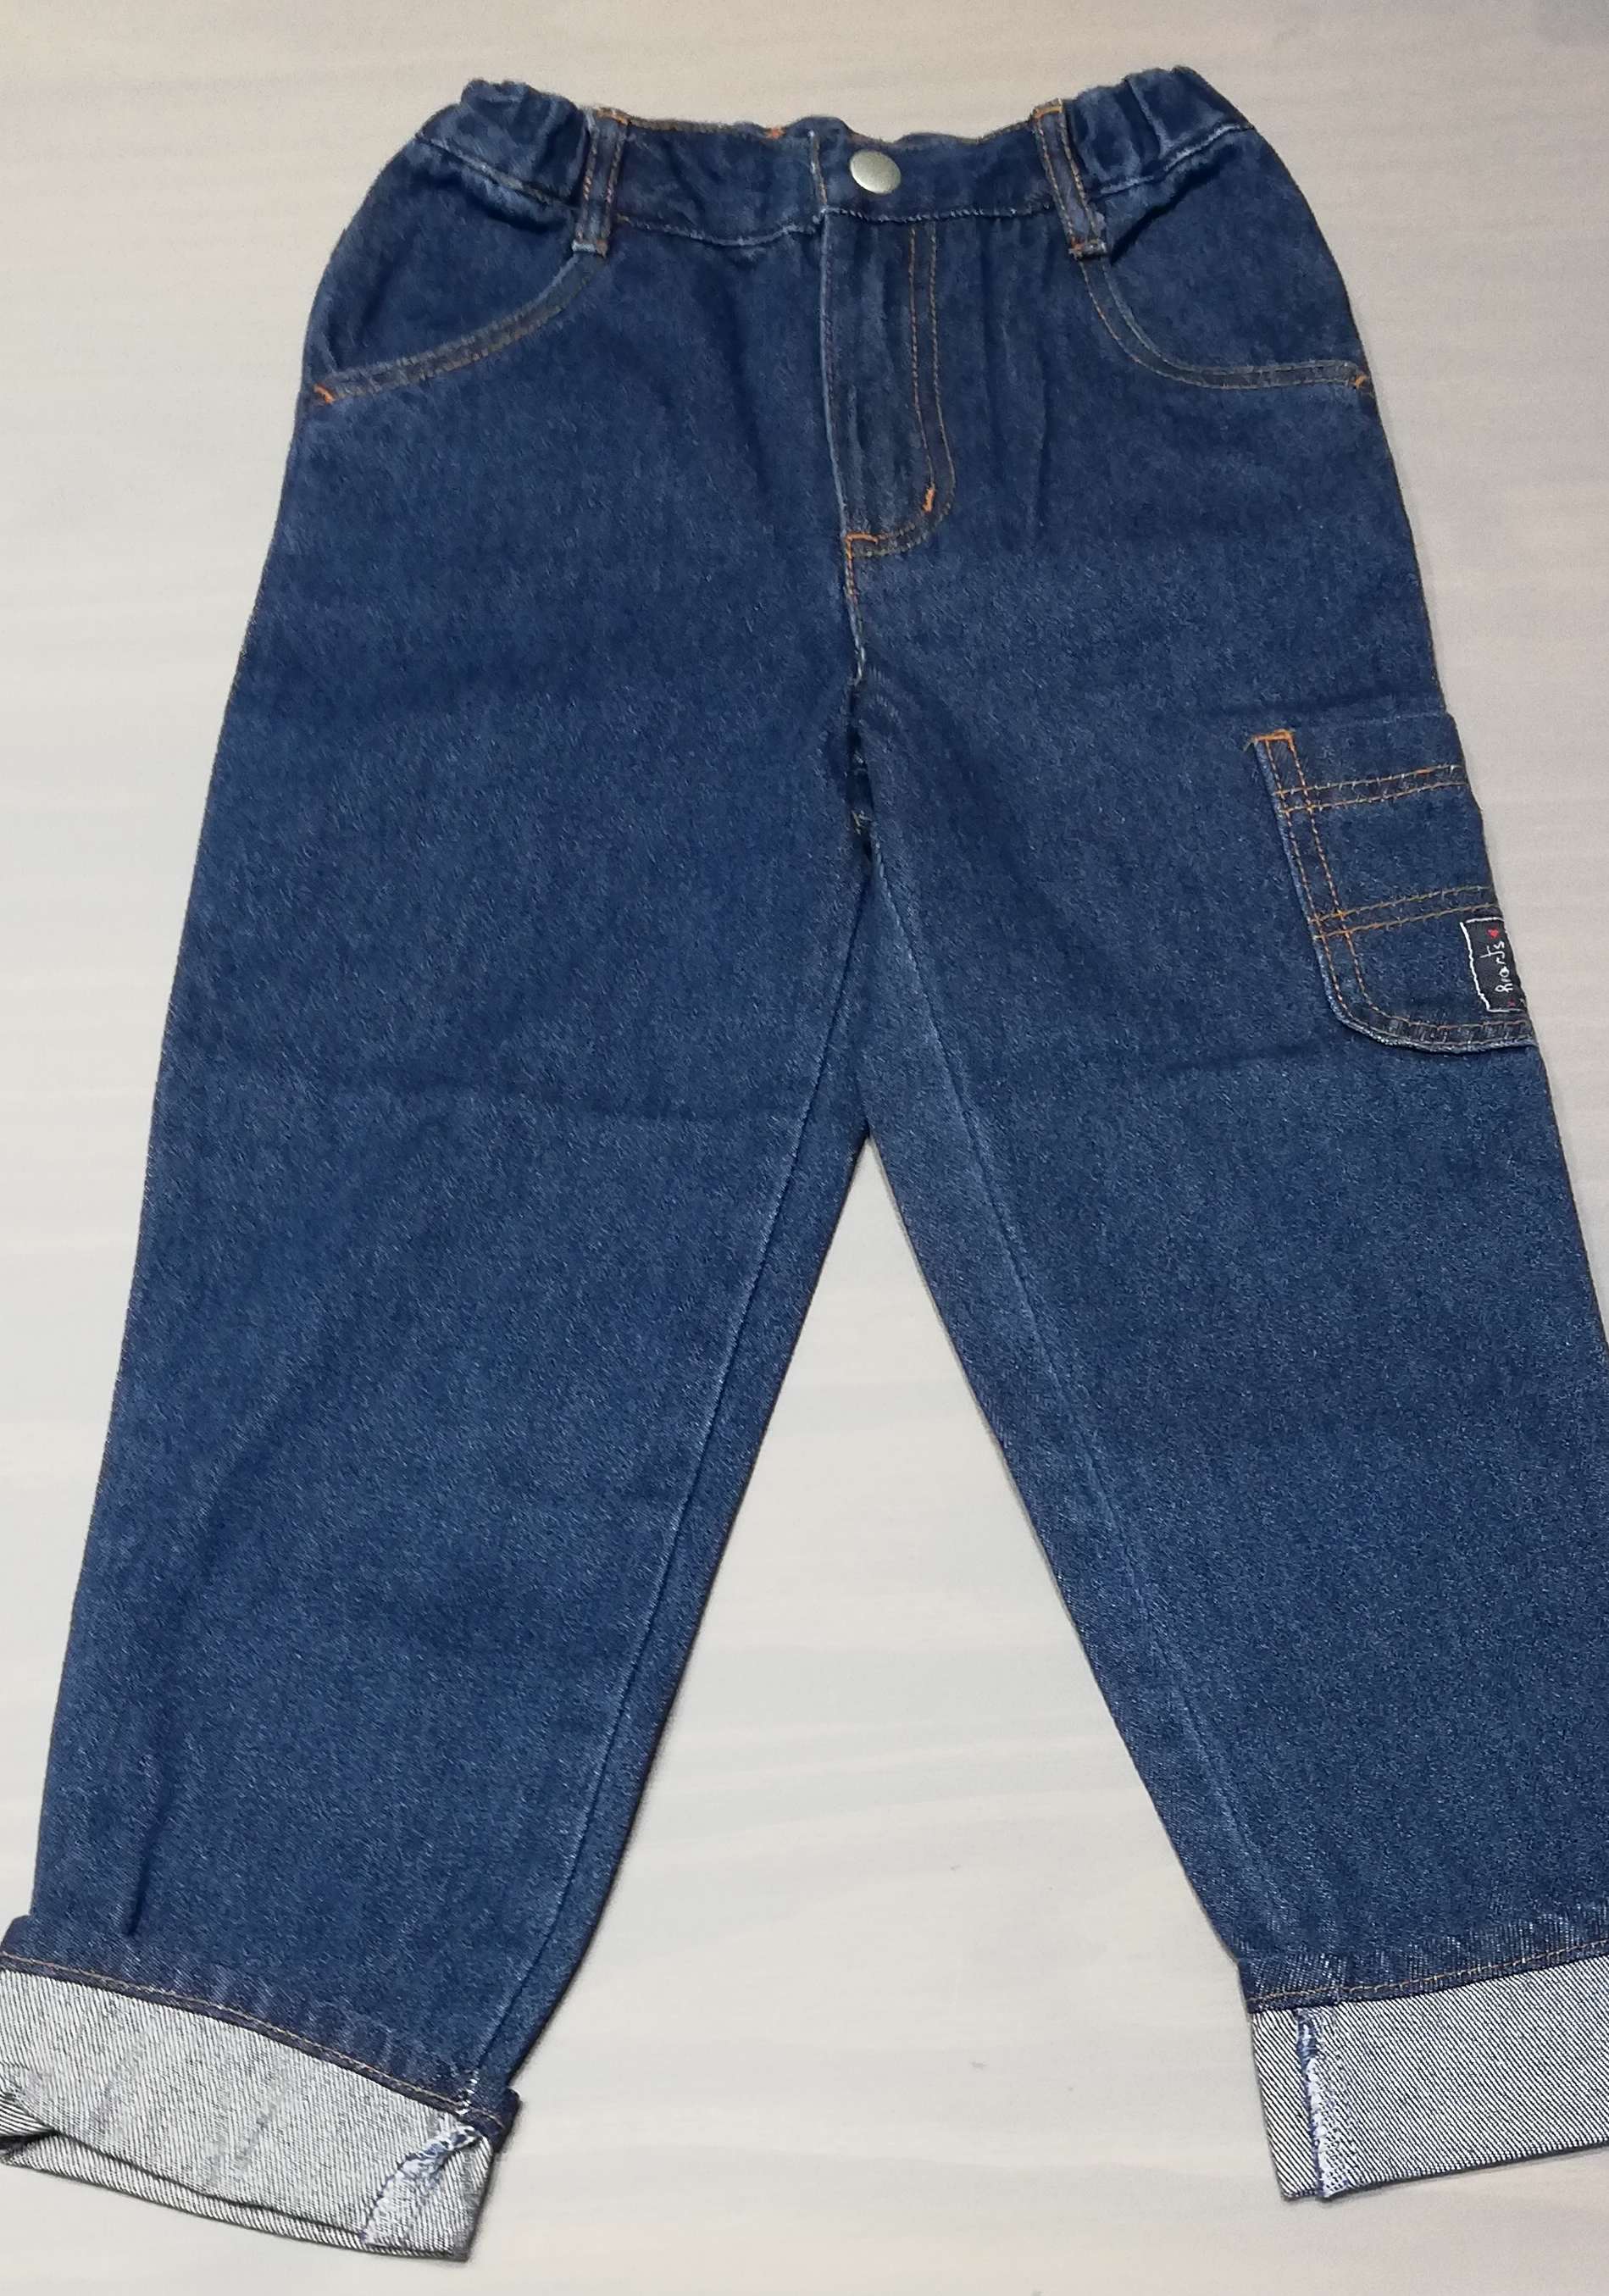 Jacky - Kindermode Jeans mit Herzchen 57450027 | Größe: 104